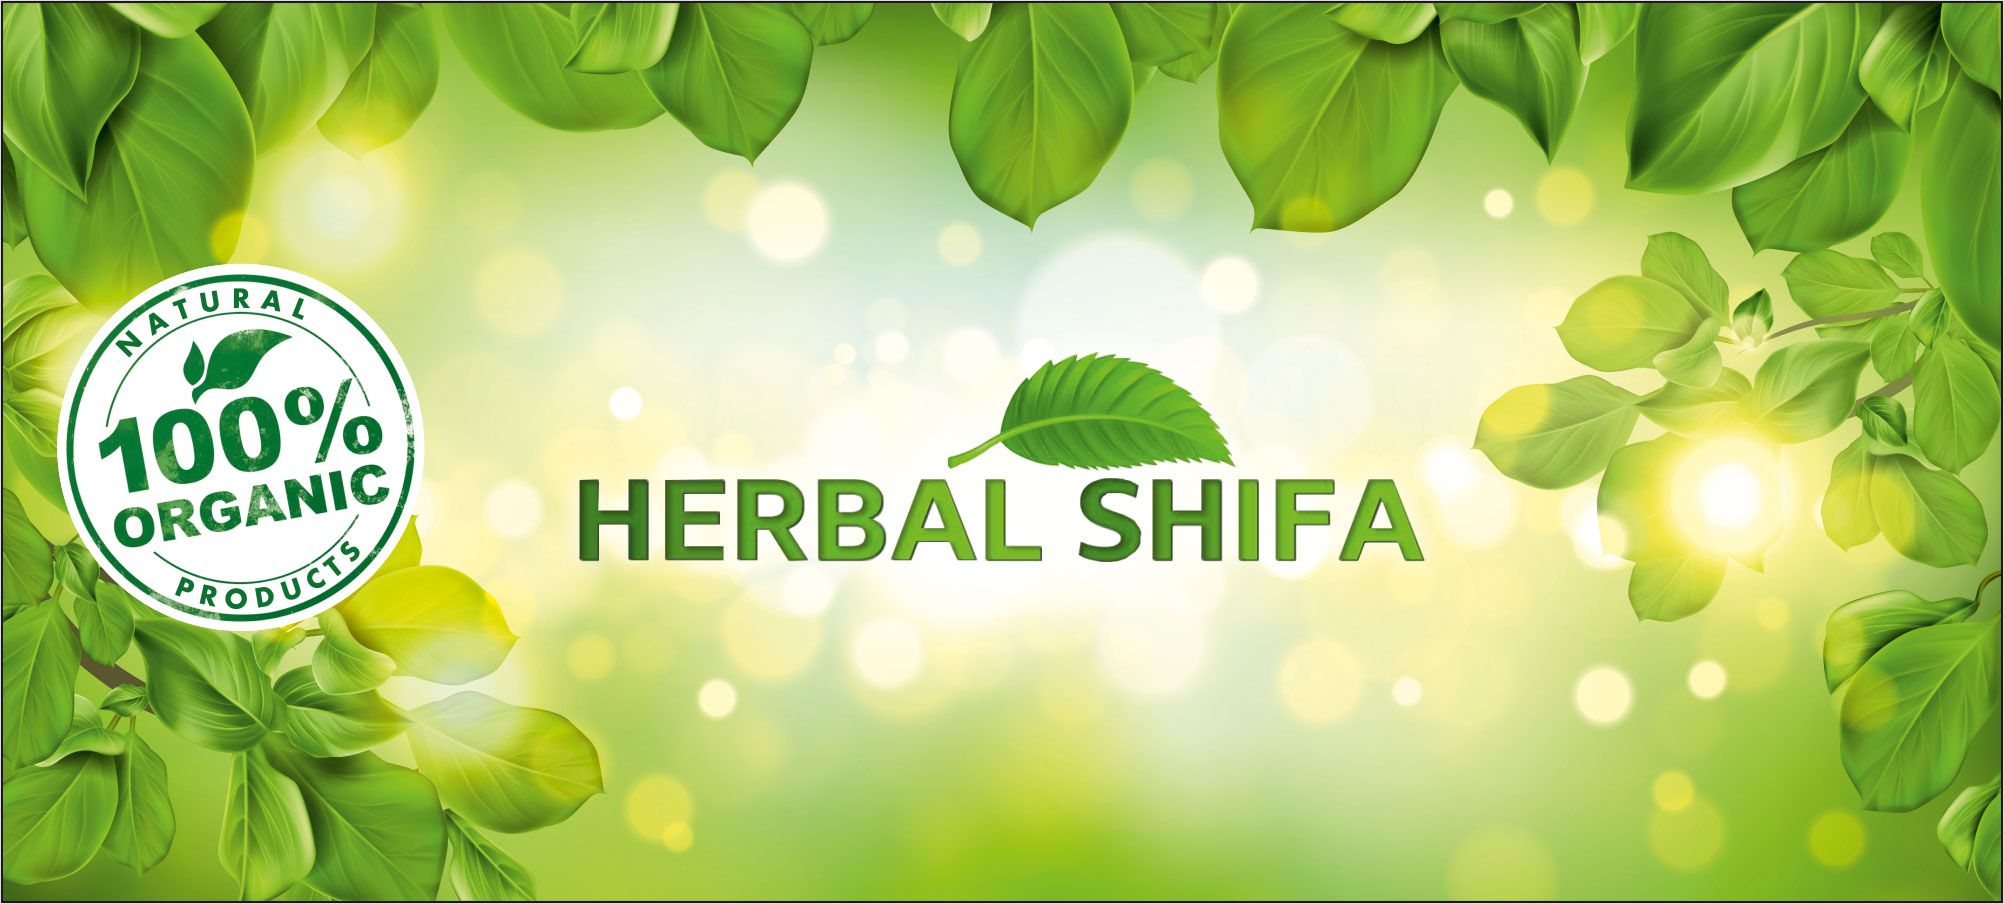 herbal-Shifa-ORGANIC-2000-Pixel-X-900-Pixel